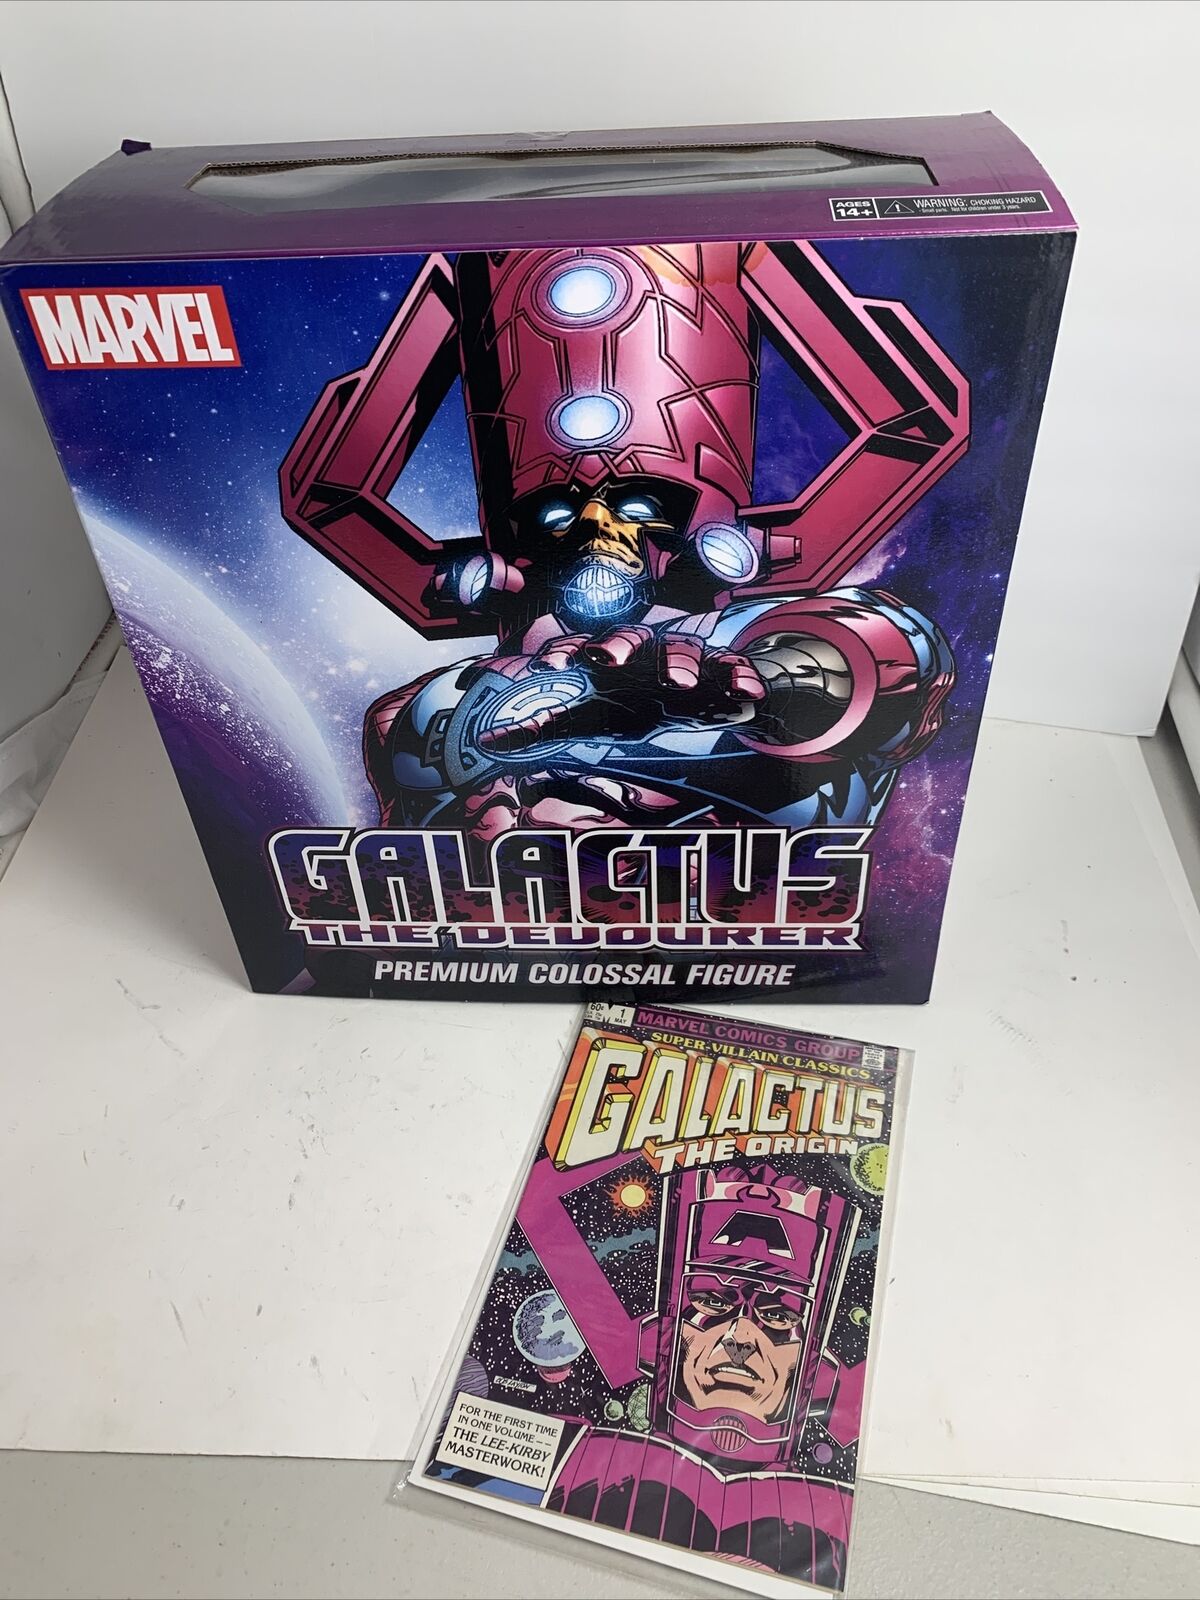 Marvel Galactus The Devourer Premium Colossal Figure and Comic The Origin 1